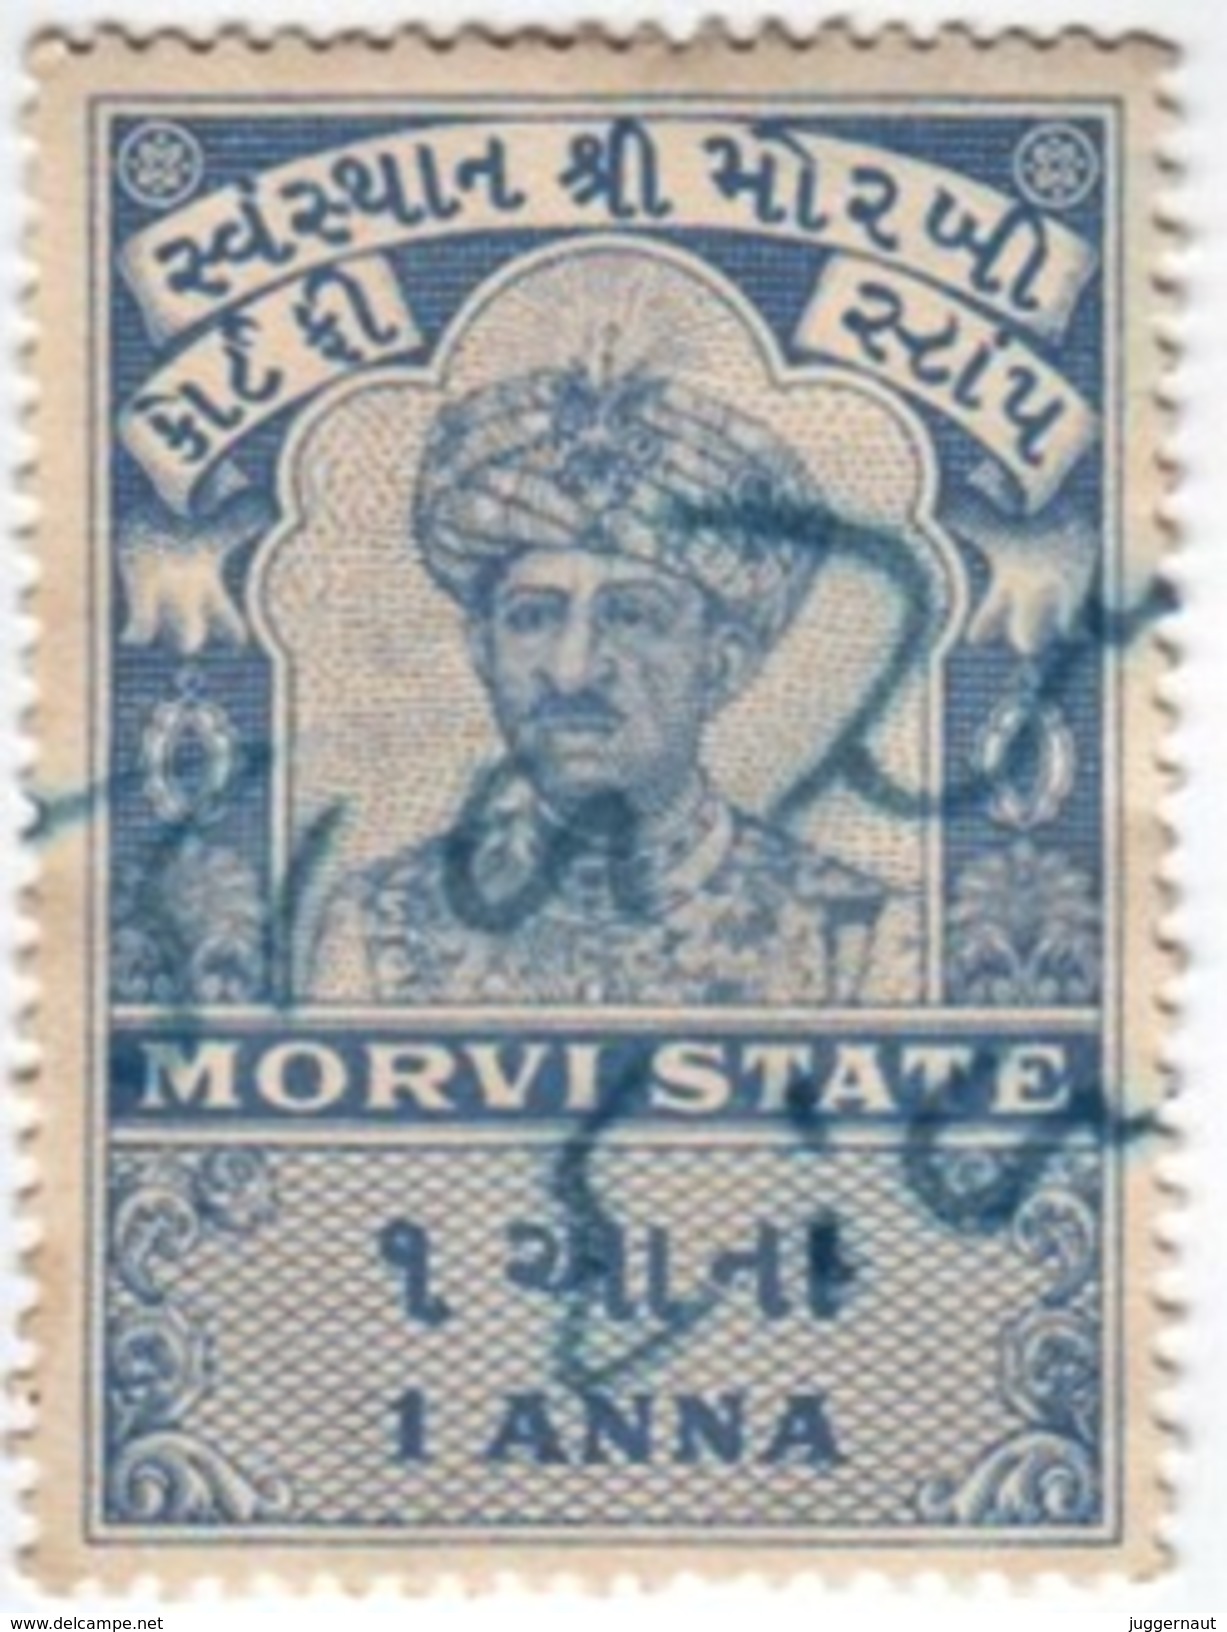 INDIA MORVEE PRINCELY STATE 1-ANNA COURT FEE STAMP 1940-45 GOOD/USED - Morvi